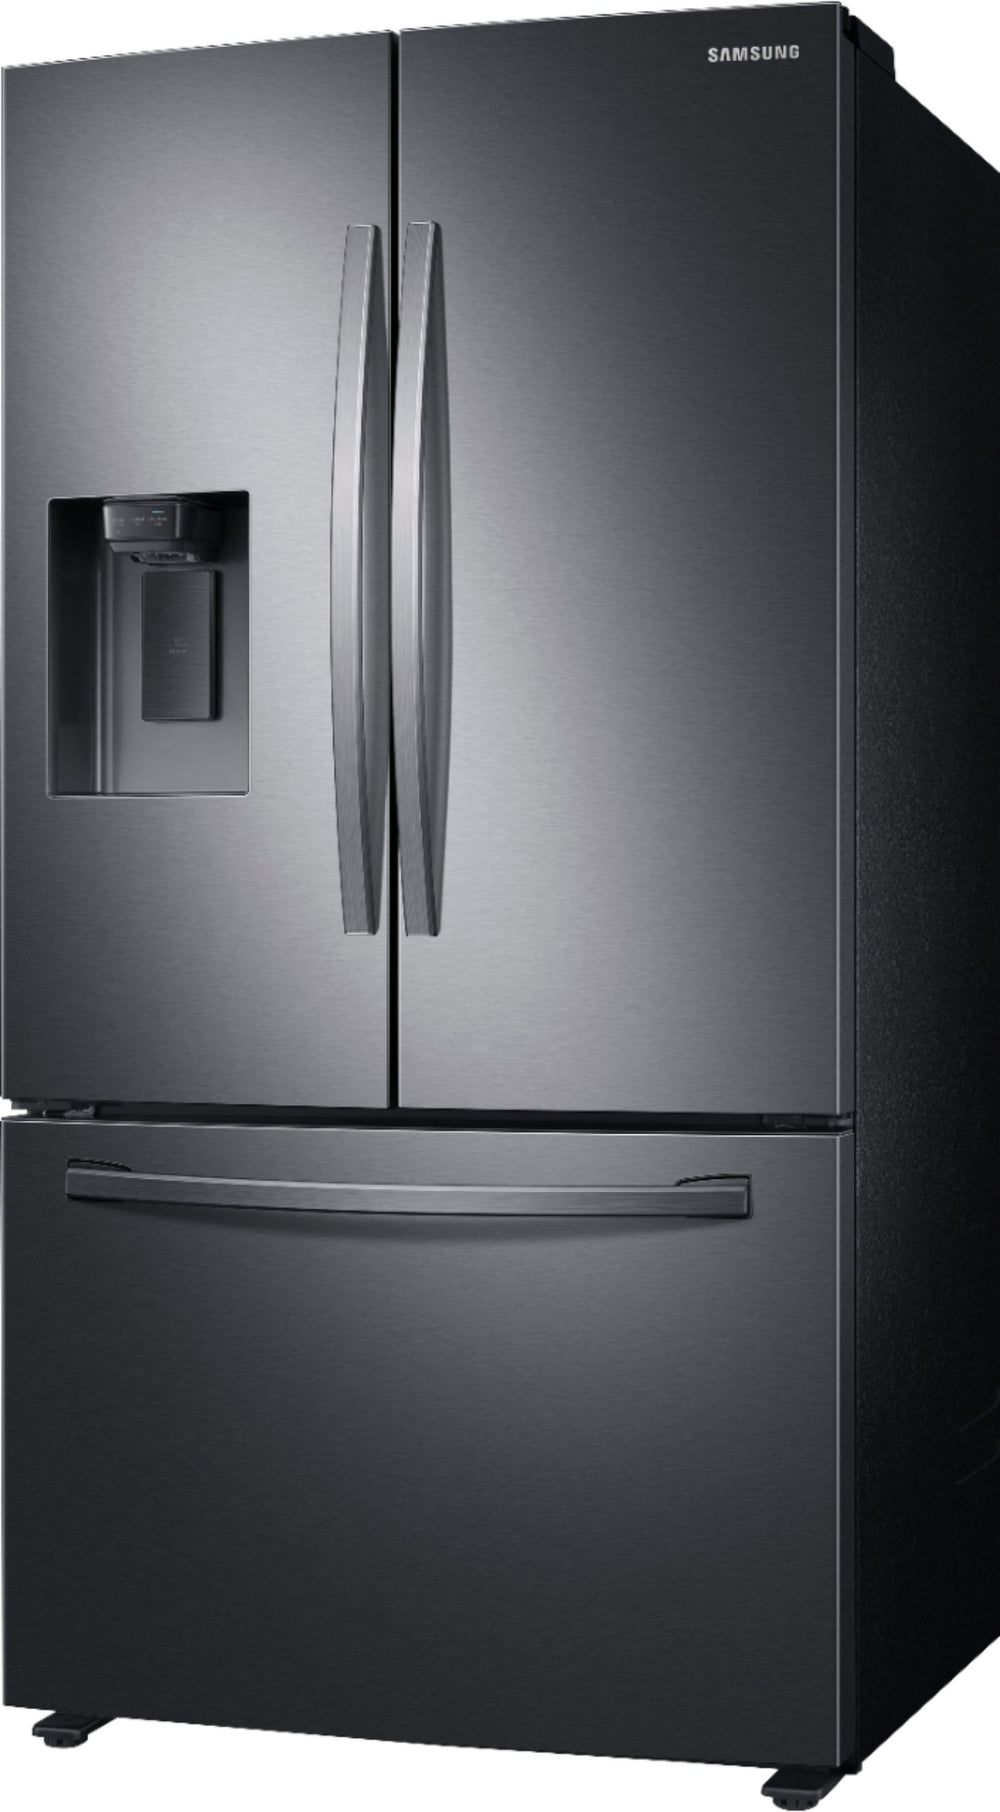 Samsung - 27 cu. ft. Large Capacity 3-Door French Door Refrigerator with External Water & Ice Dispenser - Black stainless steel_1